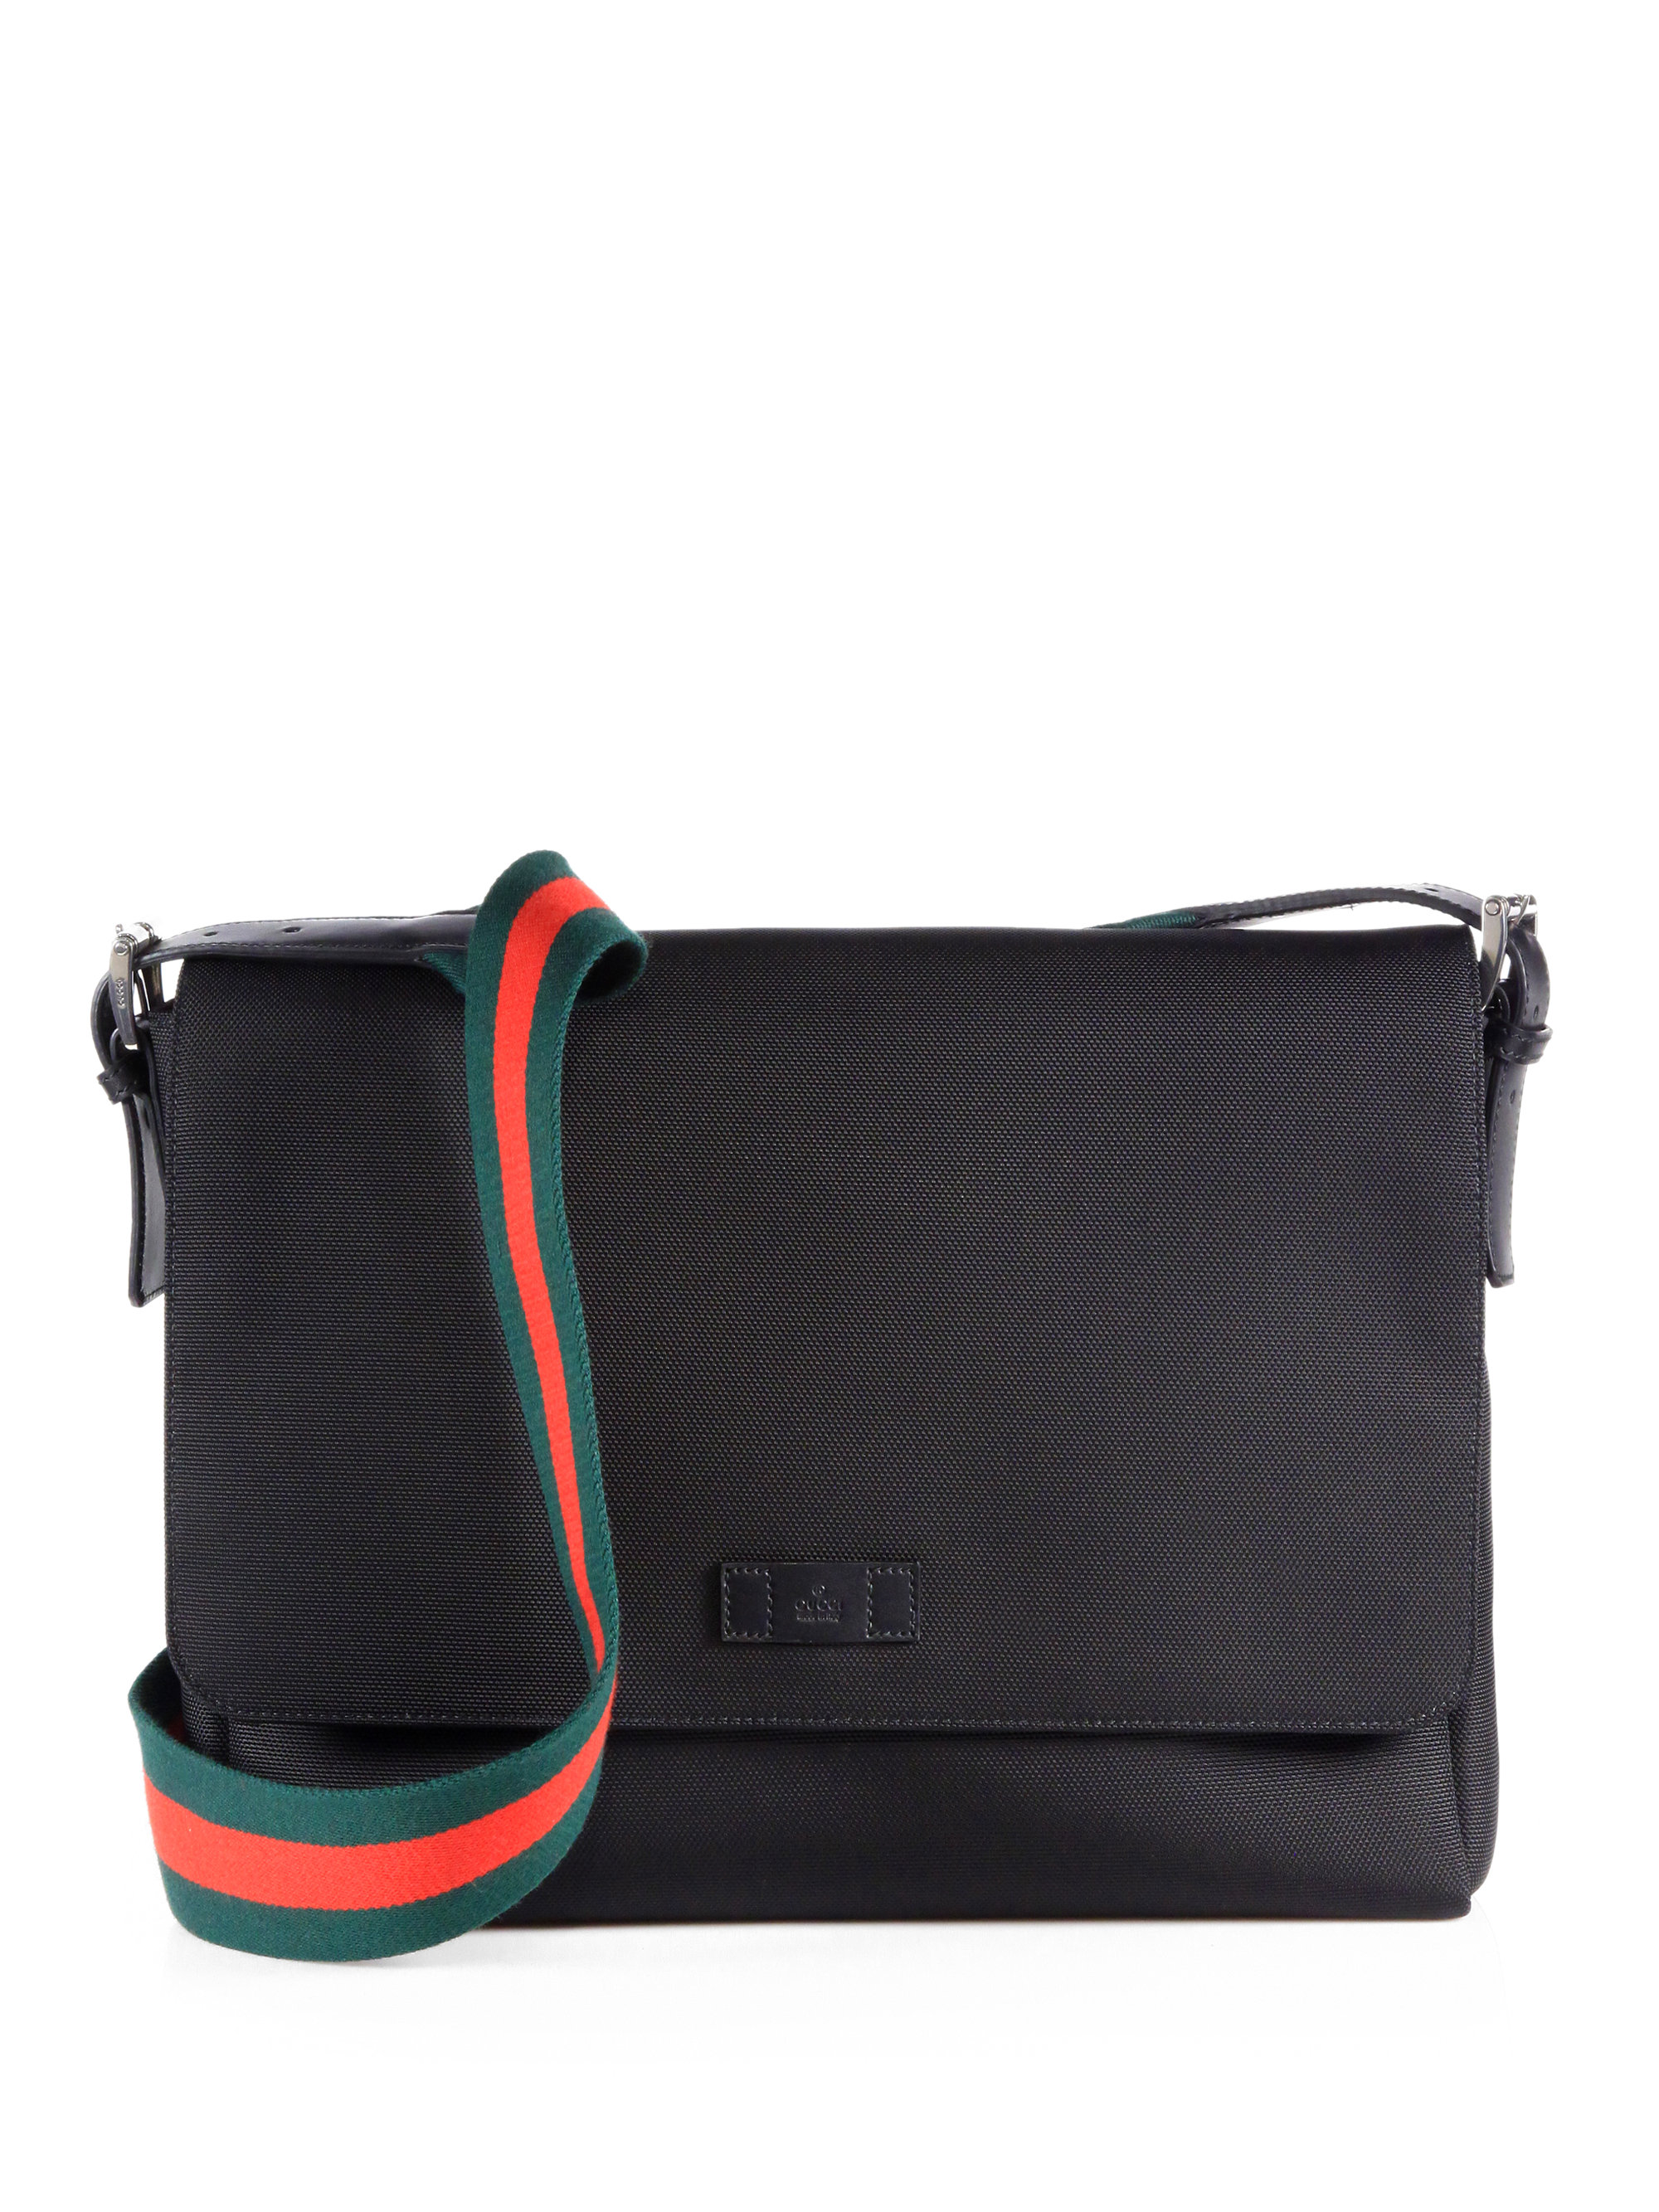 Lyst - Gucci Techno Canvas Messenger Bag in Black for Men